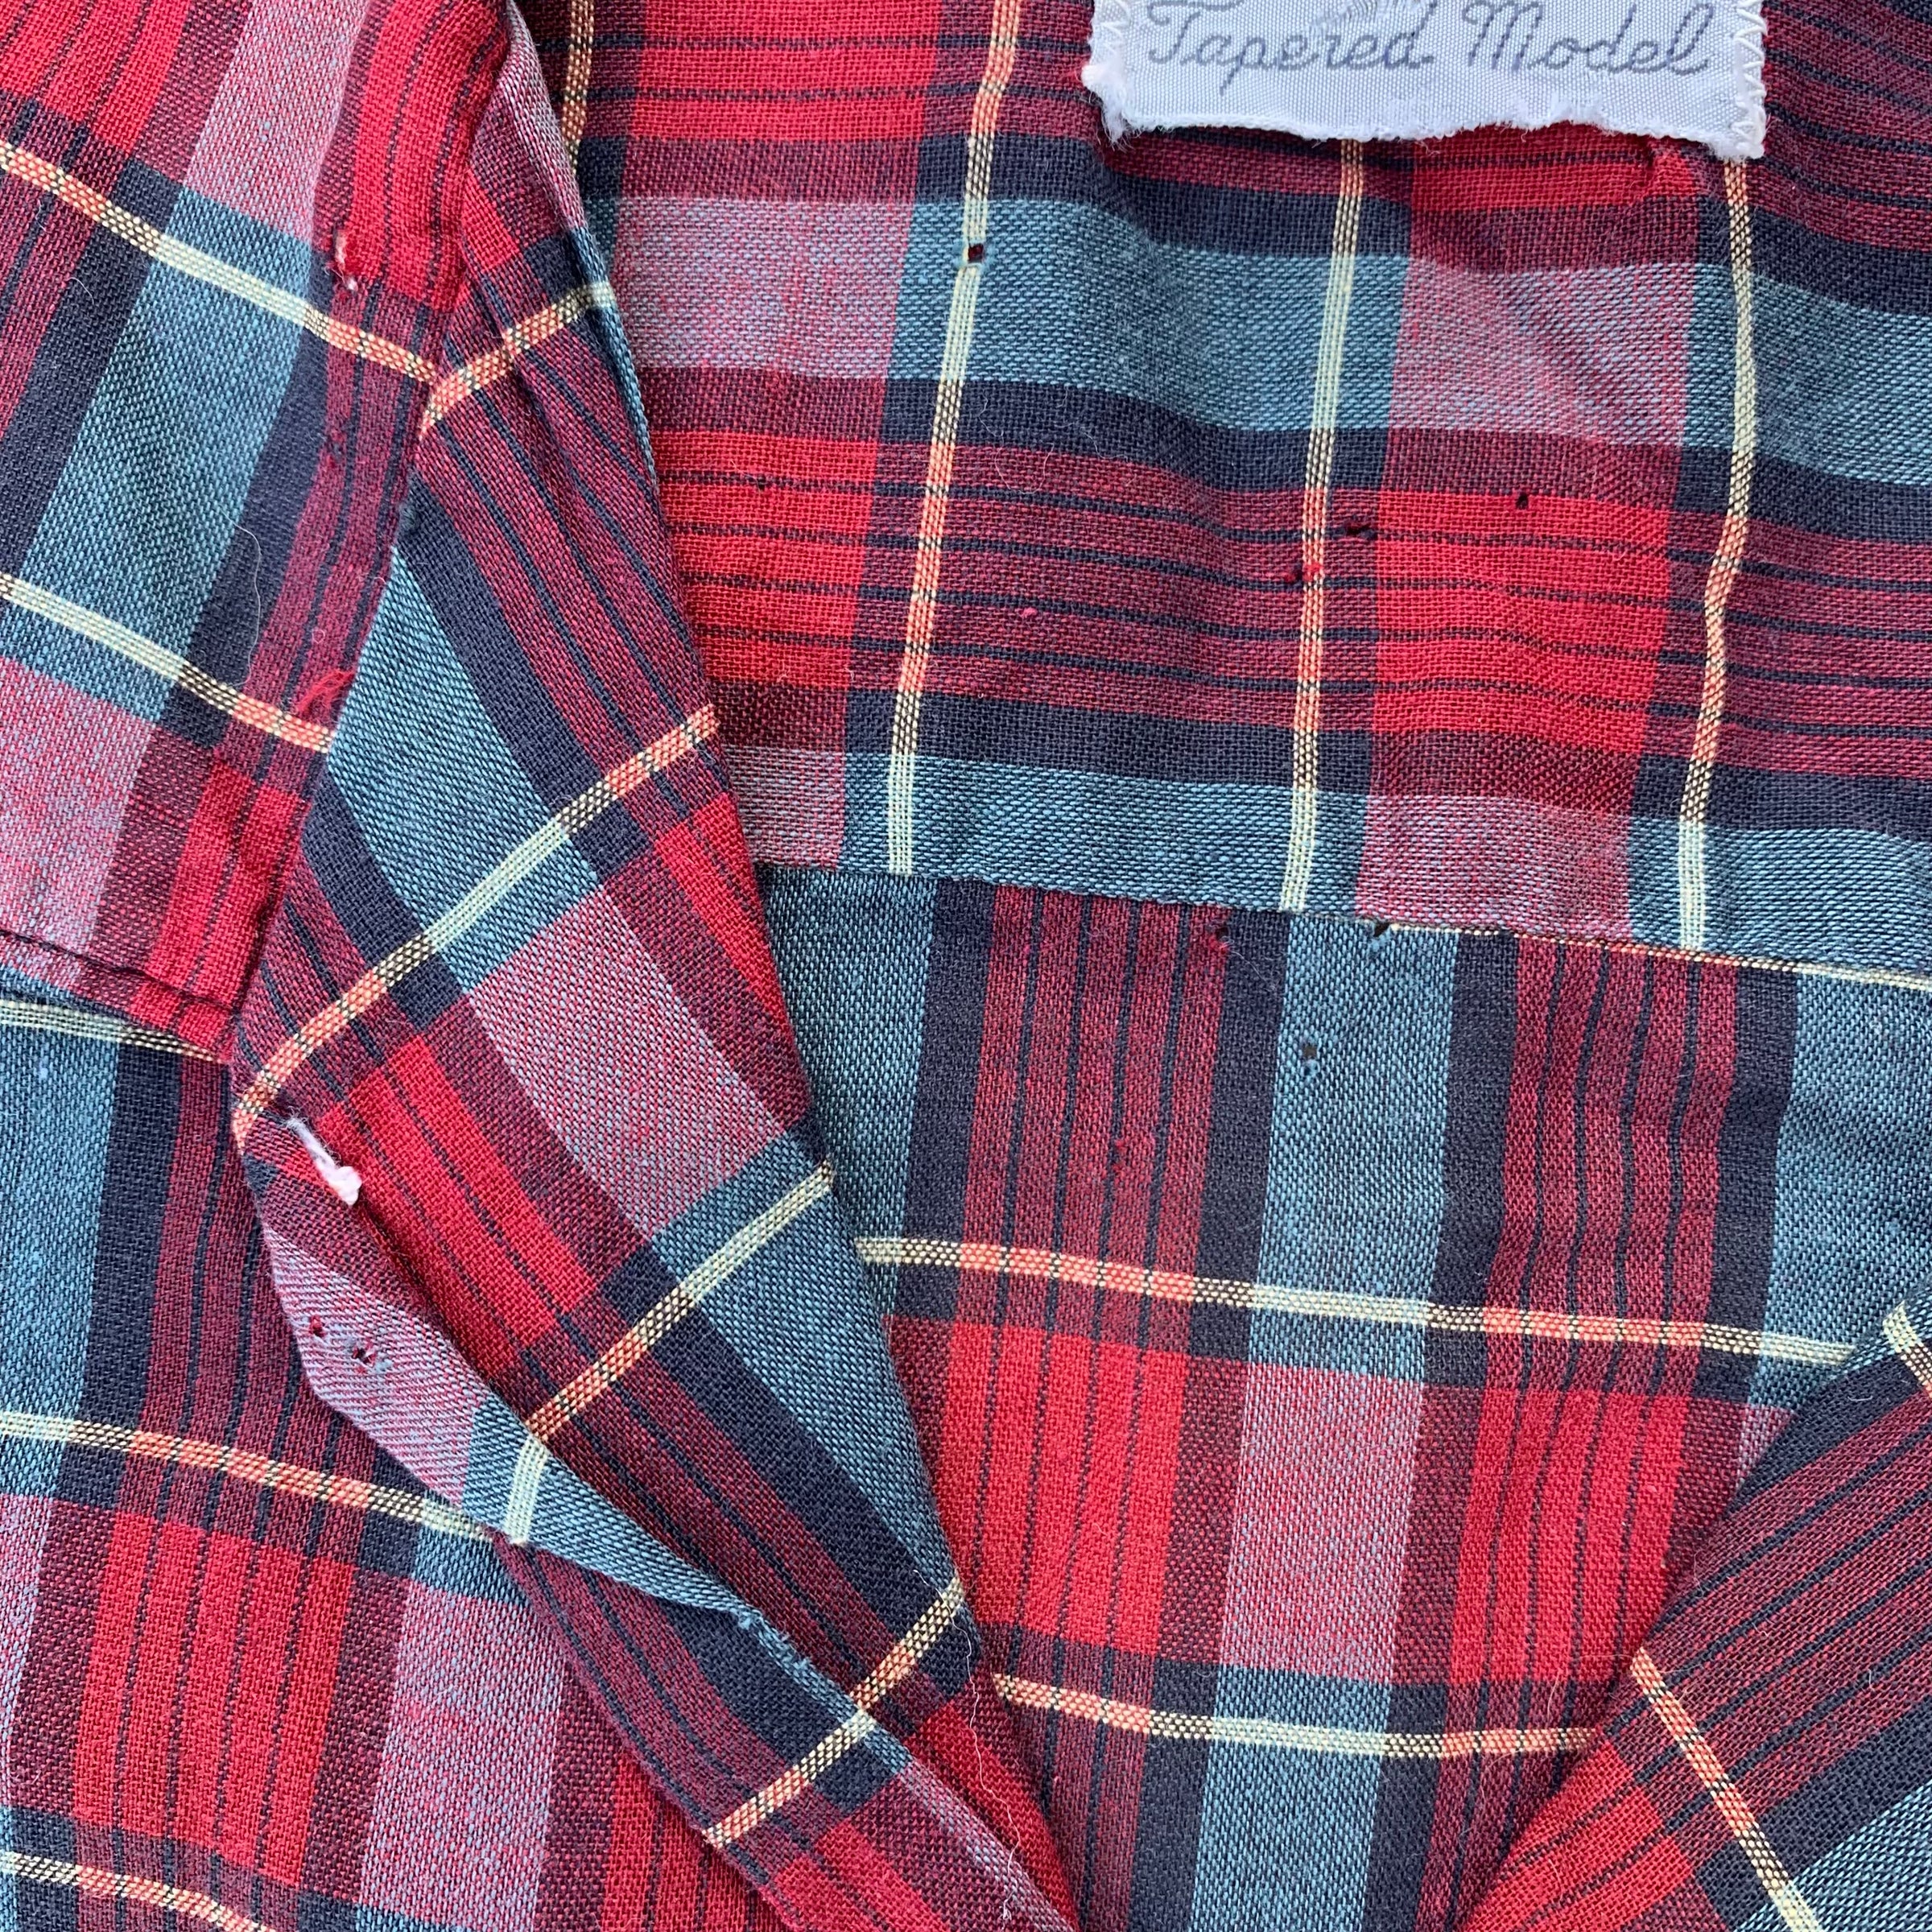 1960's Washington Dee Cee Short Sleeve Camp Collar Shirt Medium